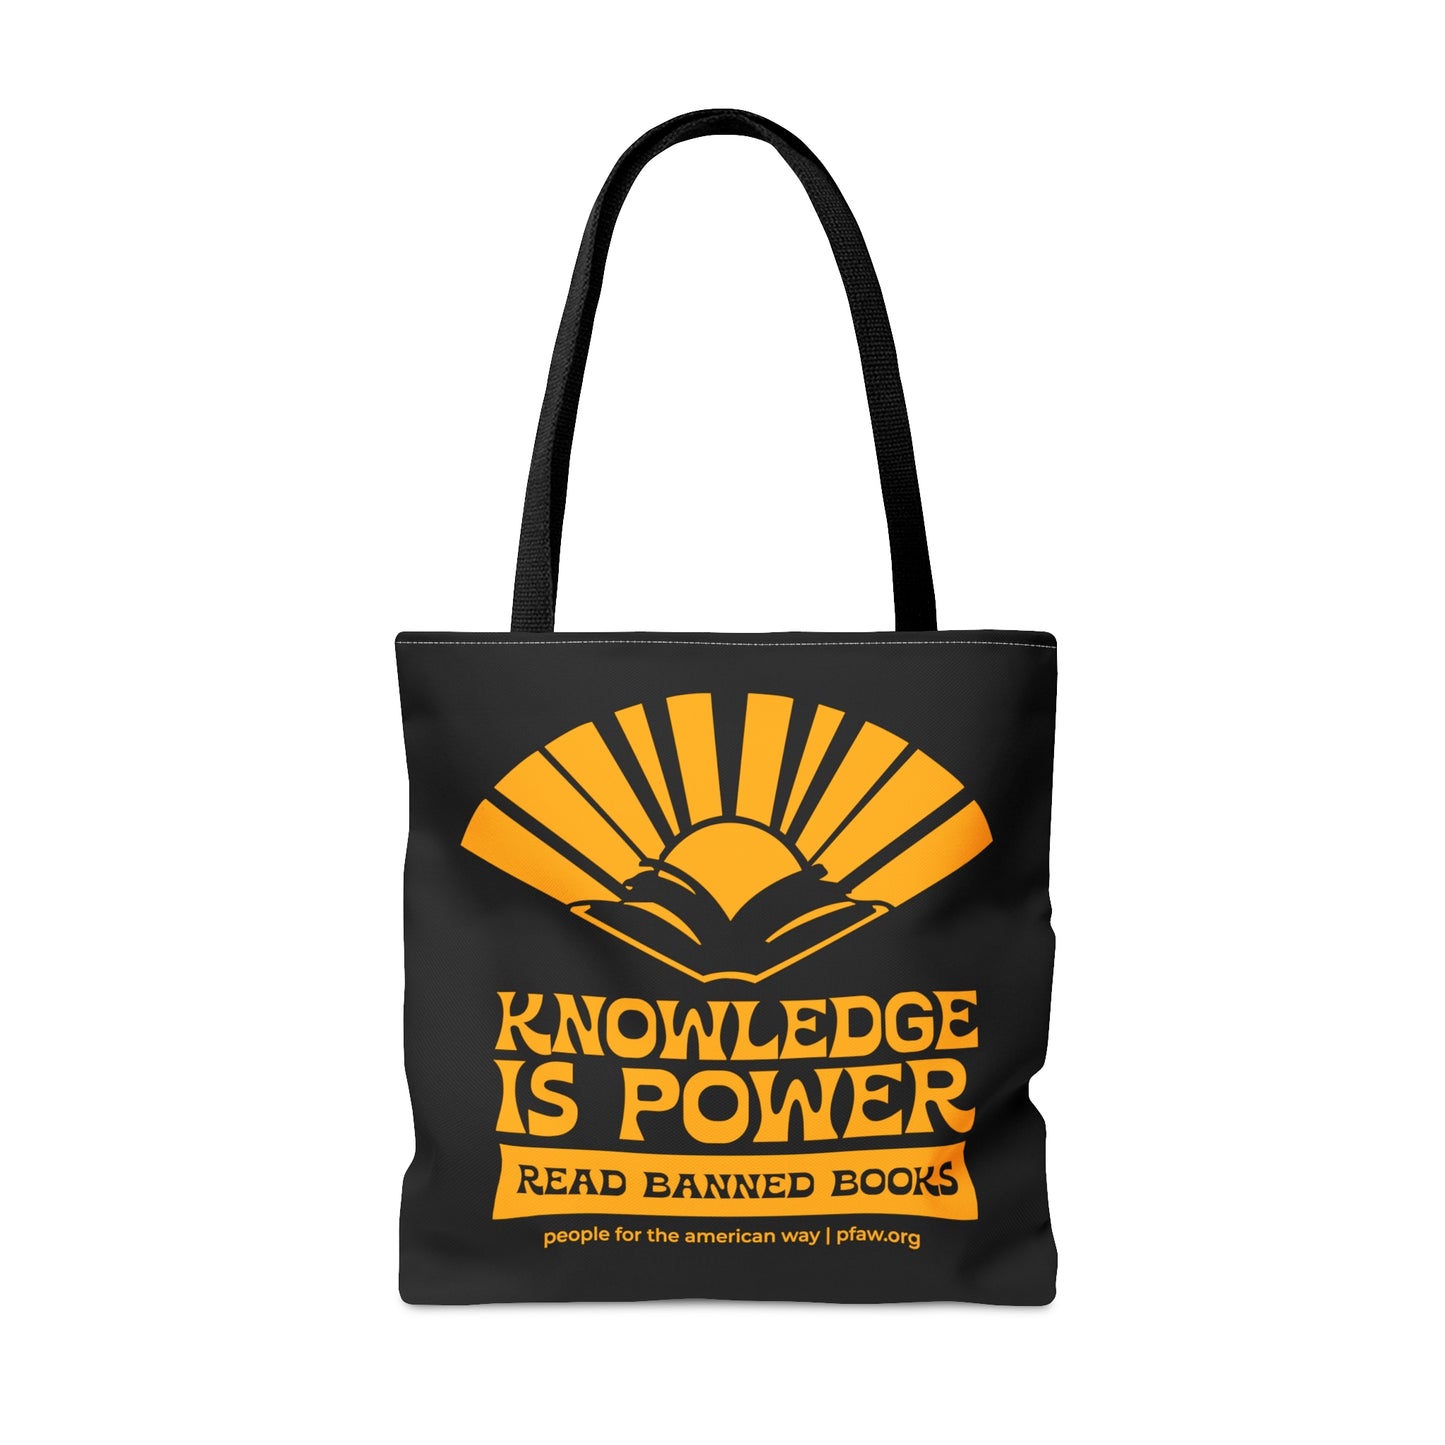 Knowledge is Power Tote - Black